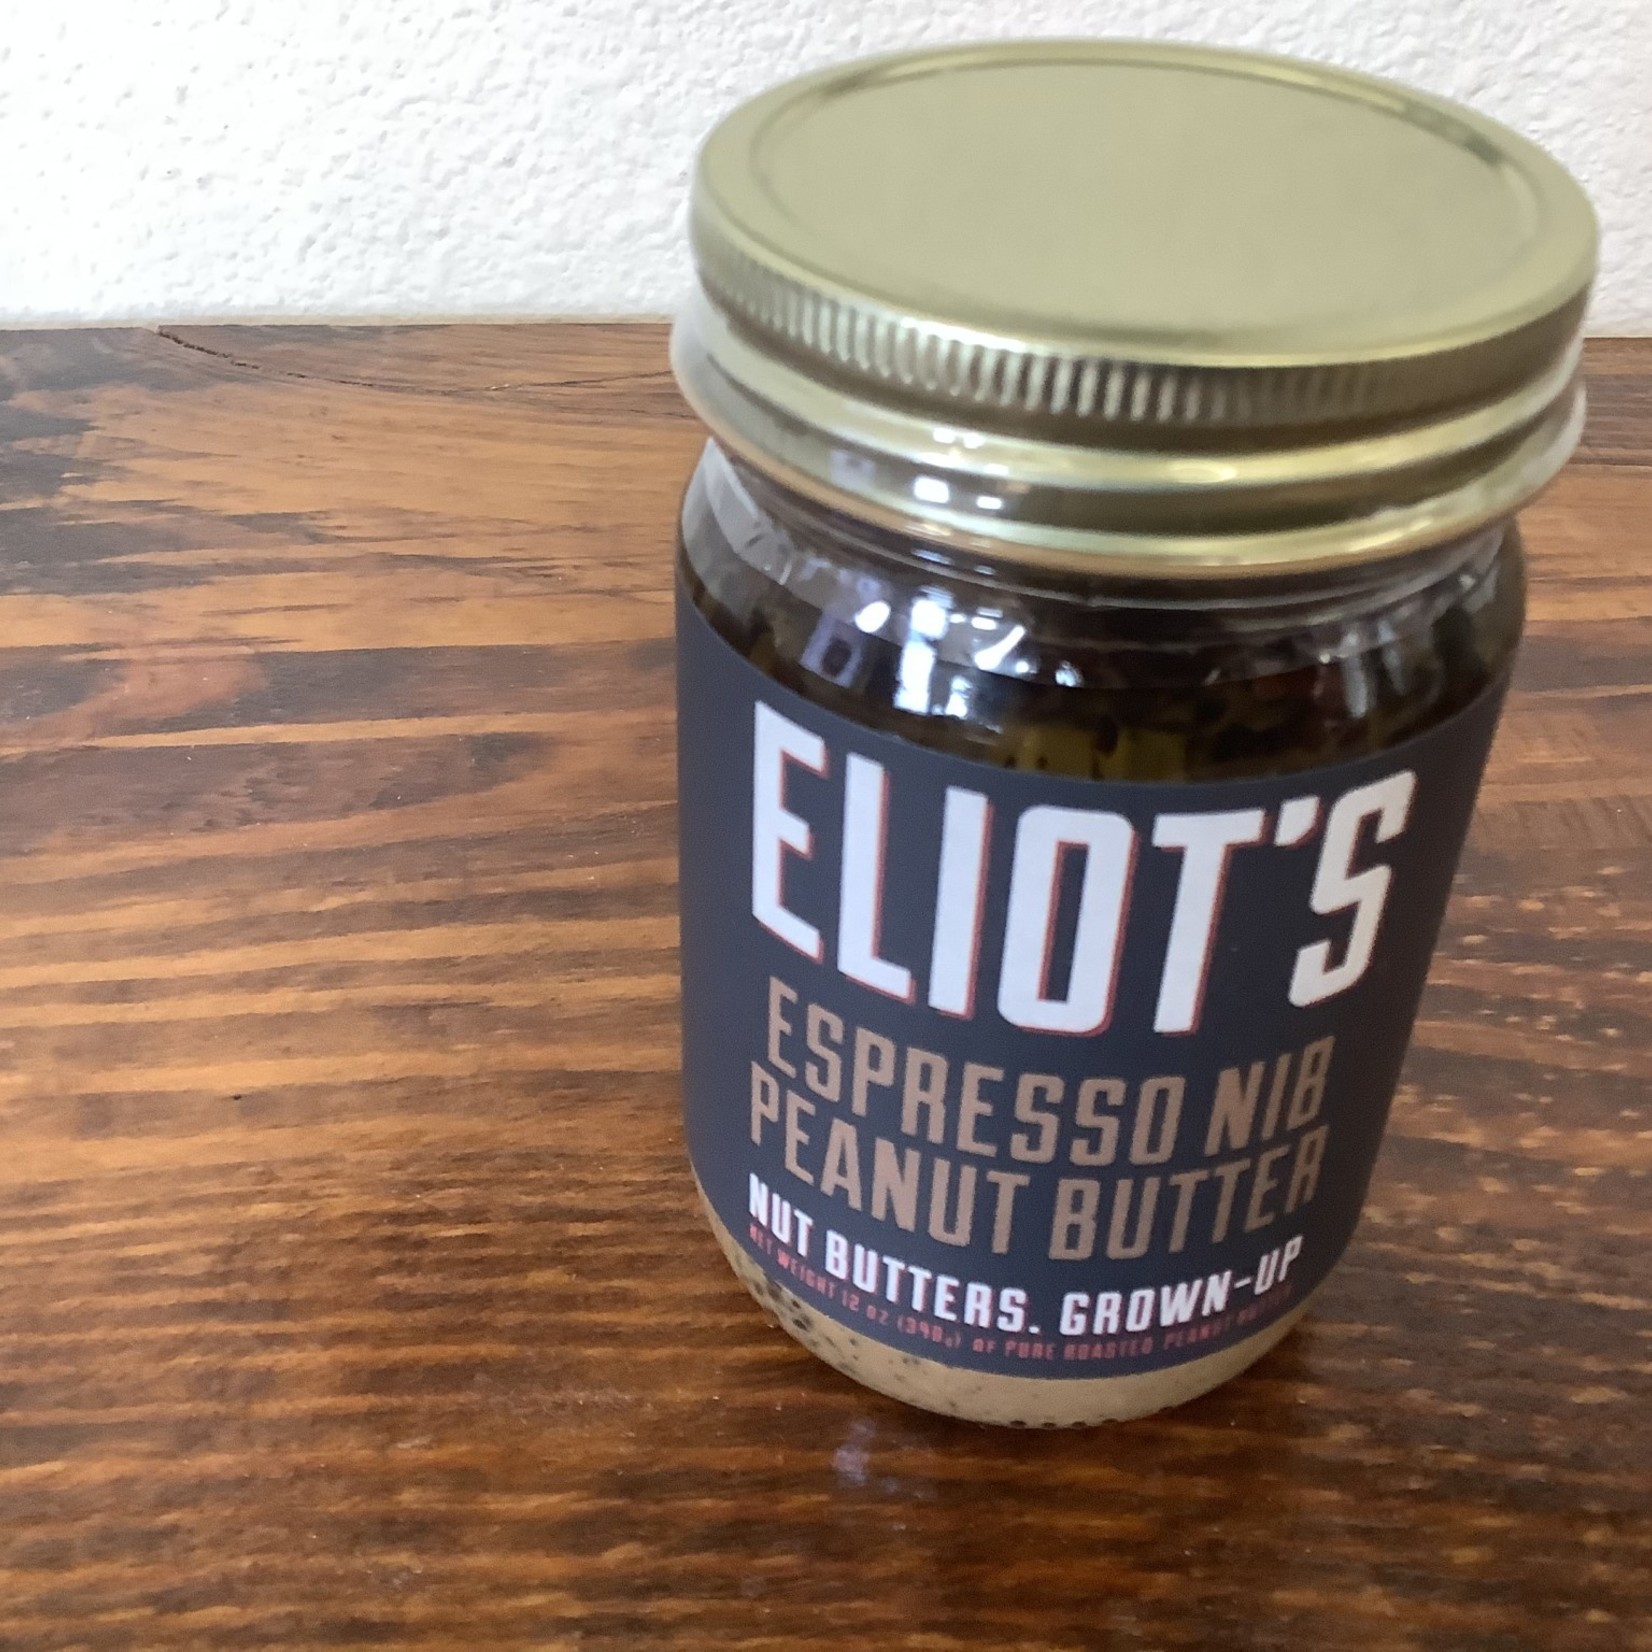 Eliot’s espresso nib peanut butter